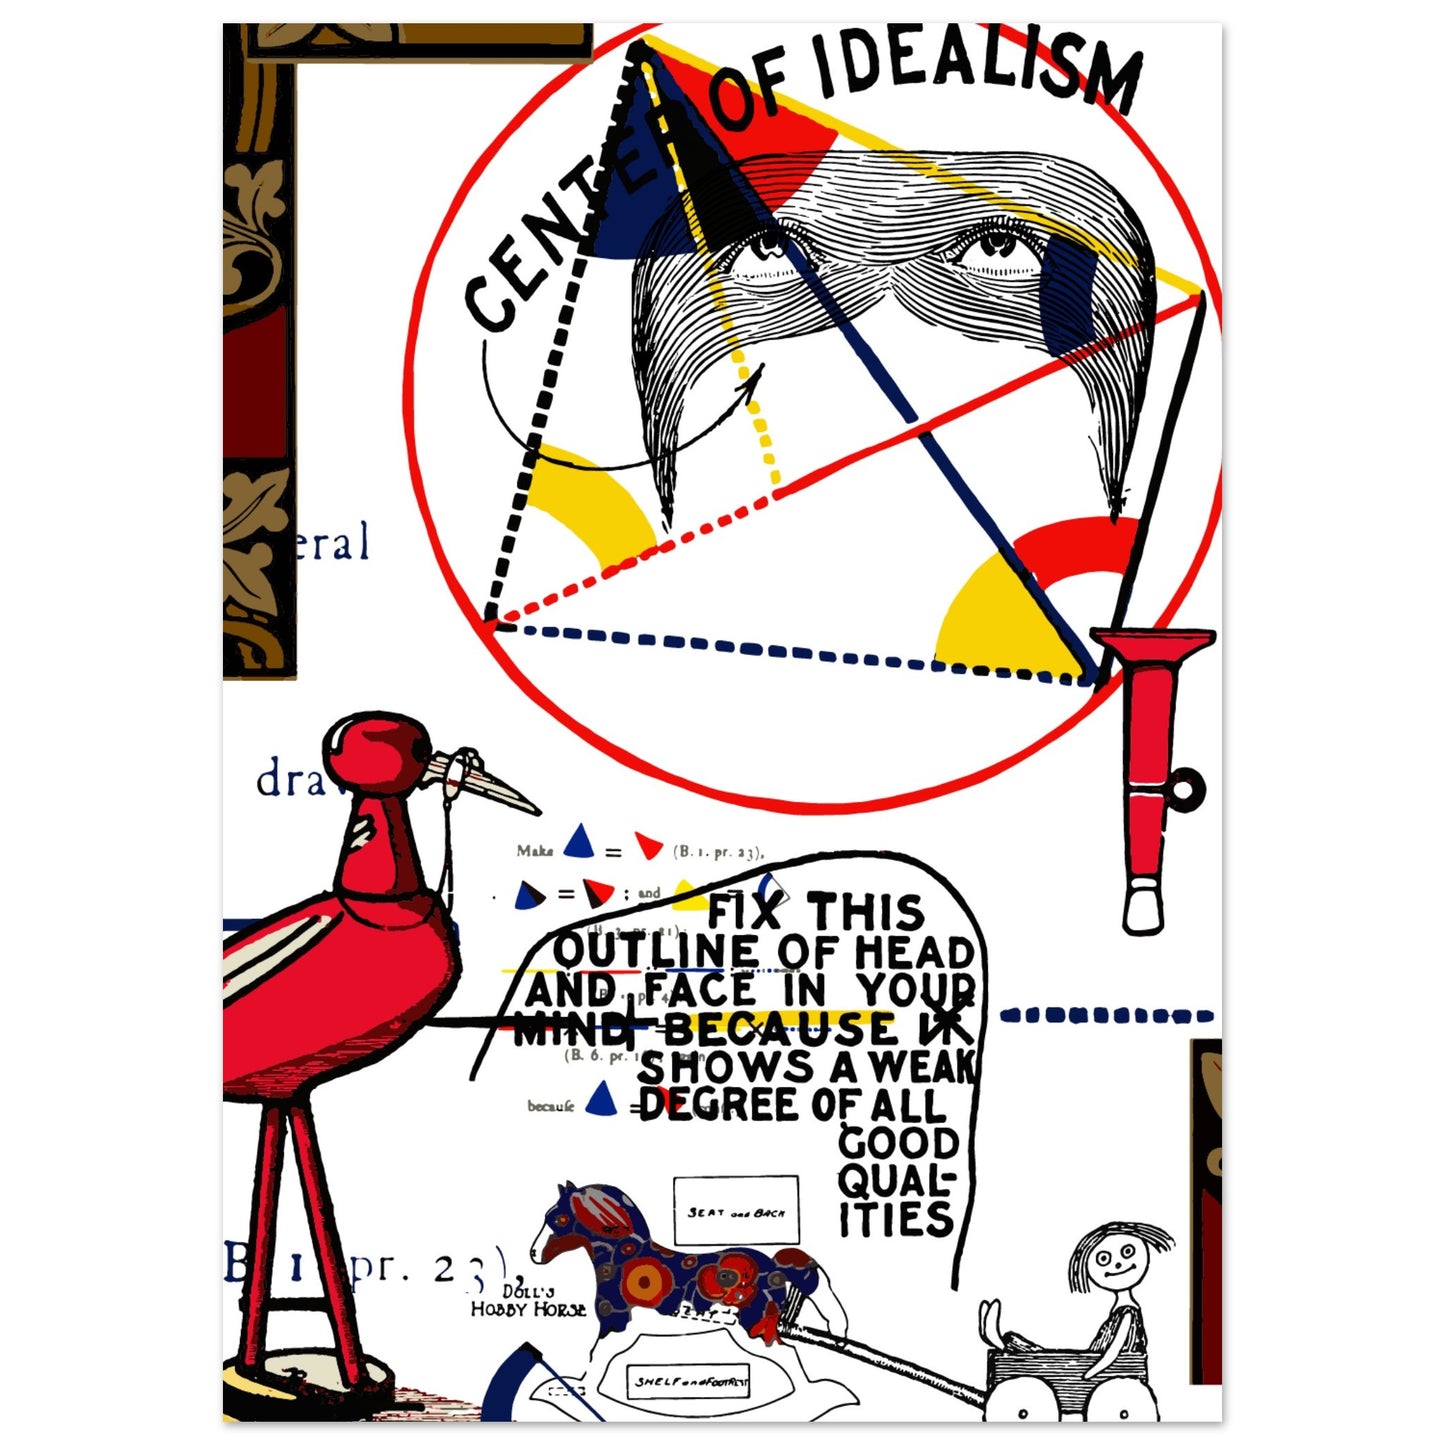 Center of idealism